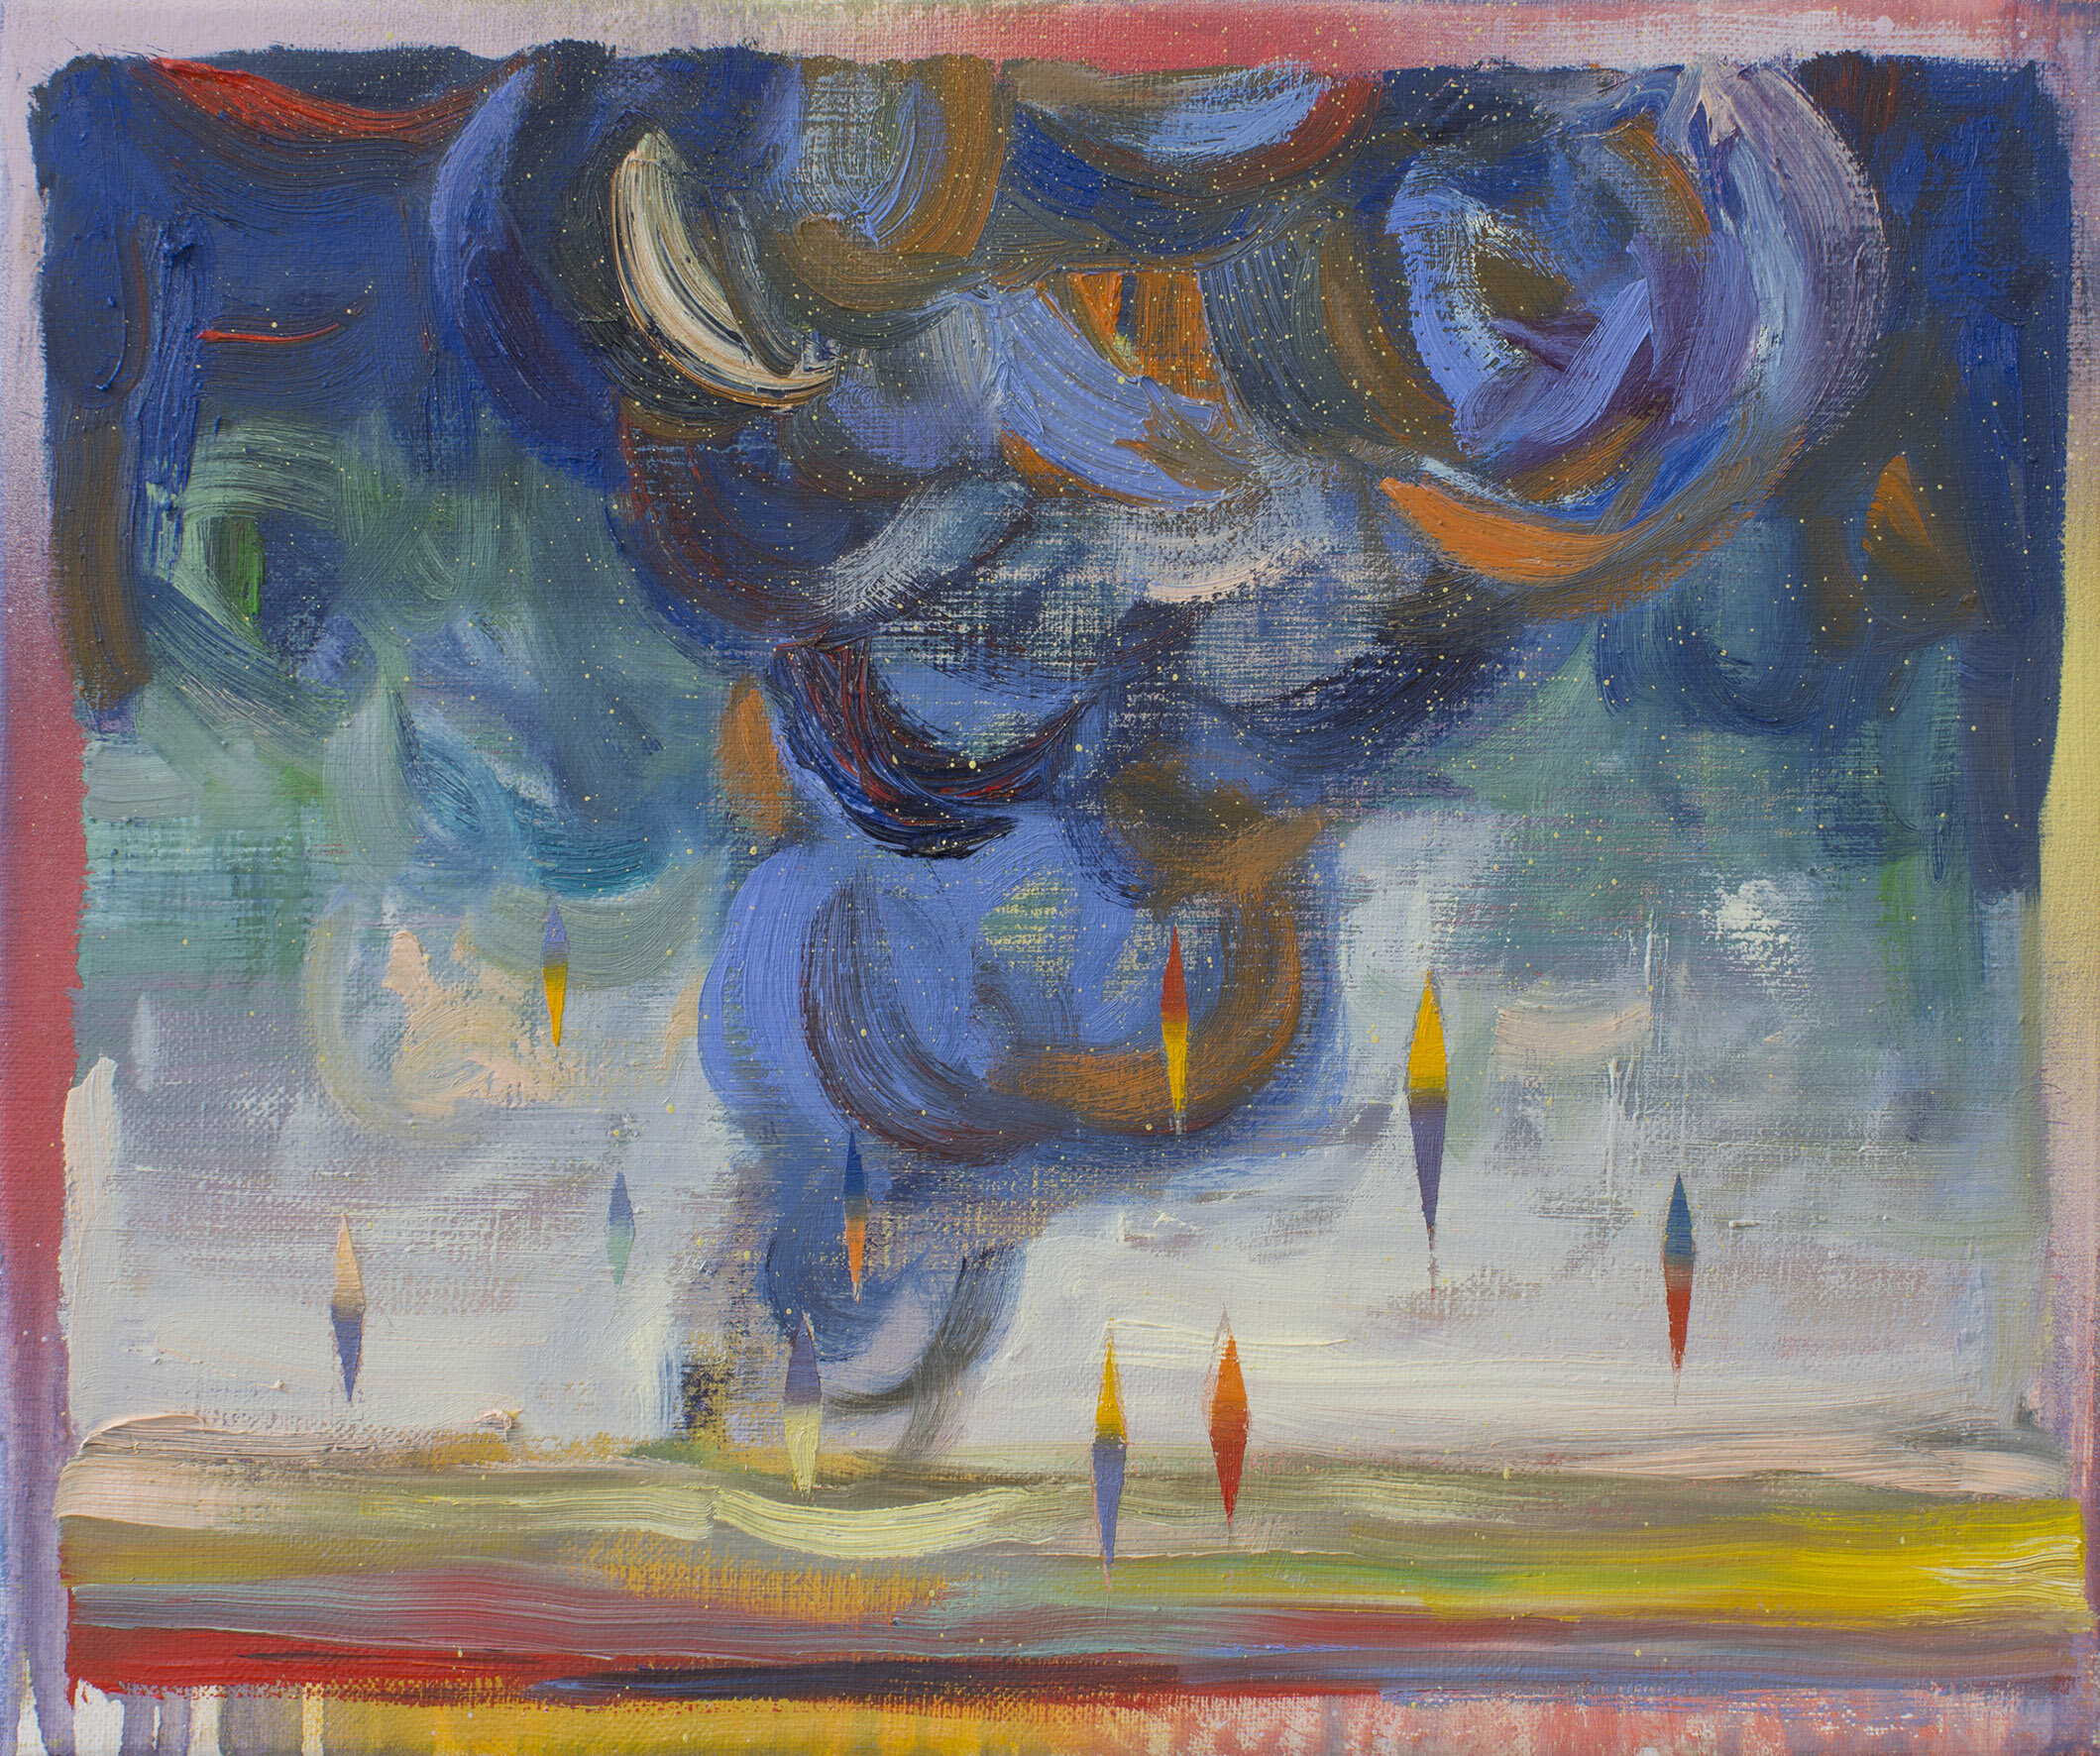   Wolke  oil on canvas 20 x 30 cm, 2020 